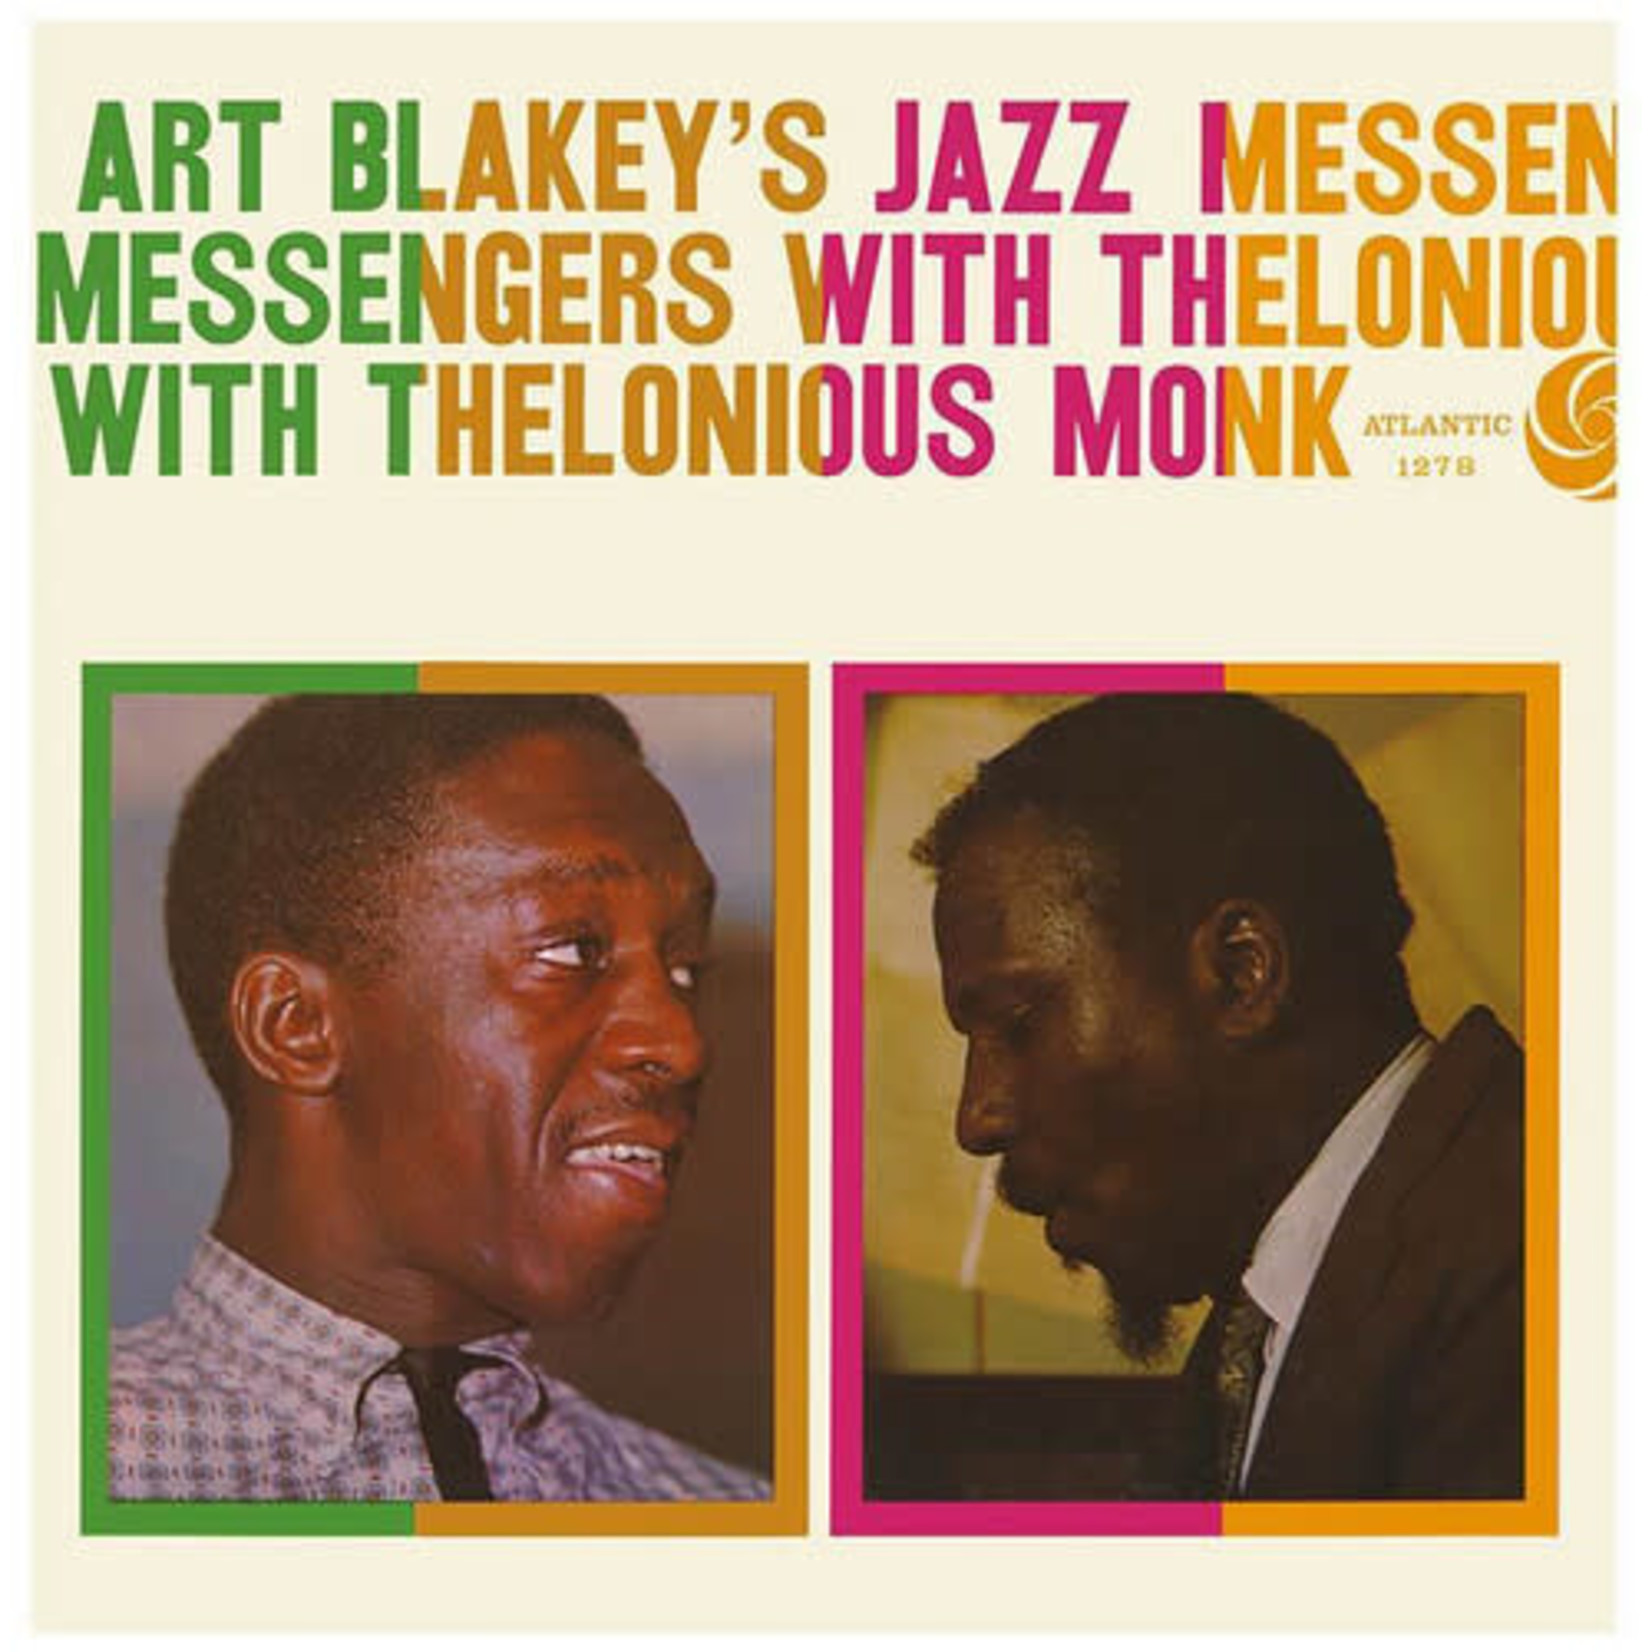 Art Blakey - Art Blakey's Jazz Messengers With Thelonious Monk (Dlx Ed) [2CD]